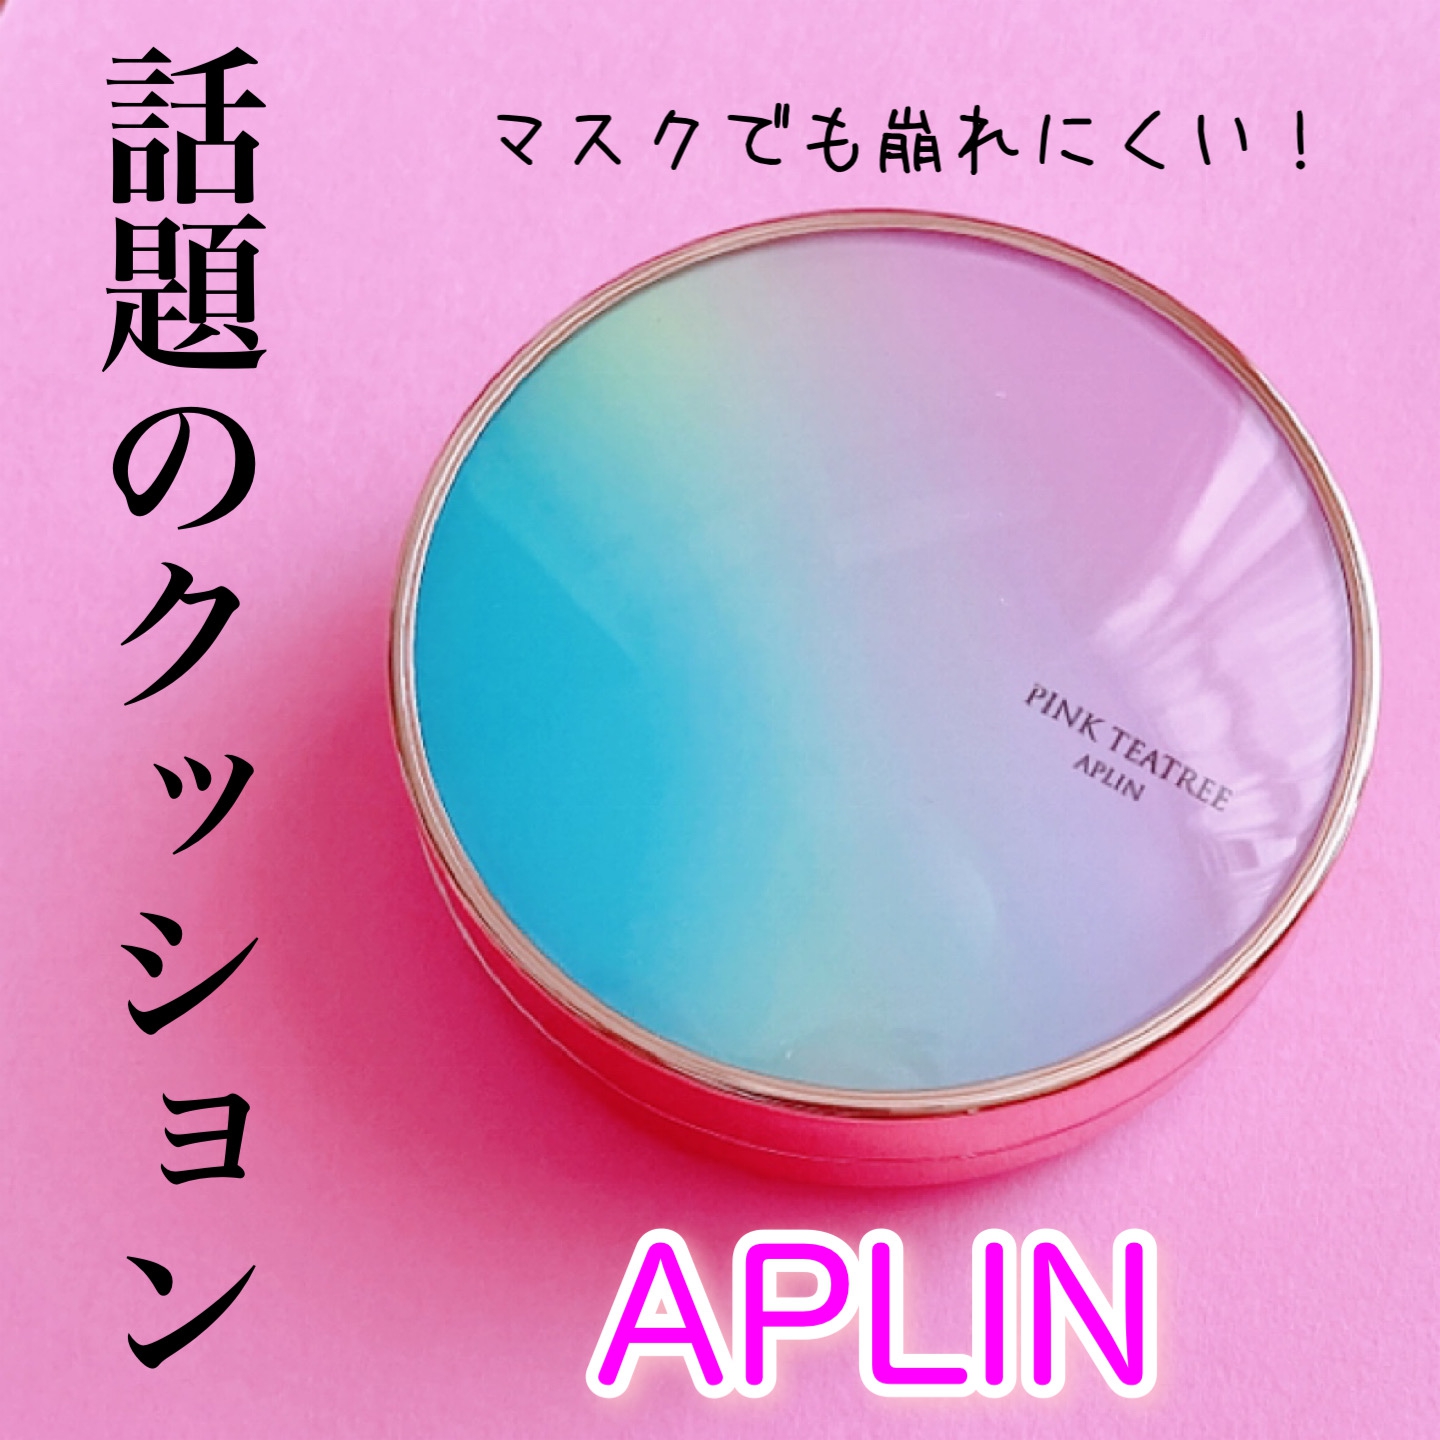 APLIN(アプリン) ピンクティーツリーカバークッションを使ったyunaさんのクチコミ画像1